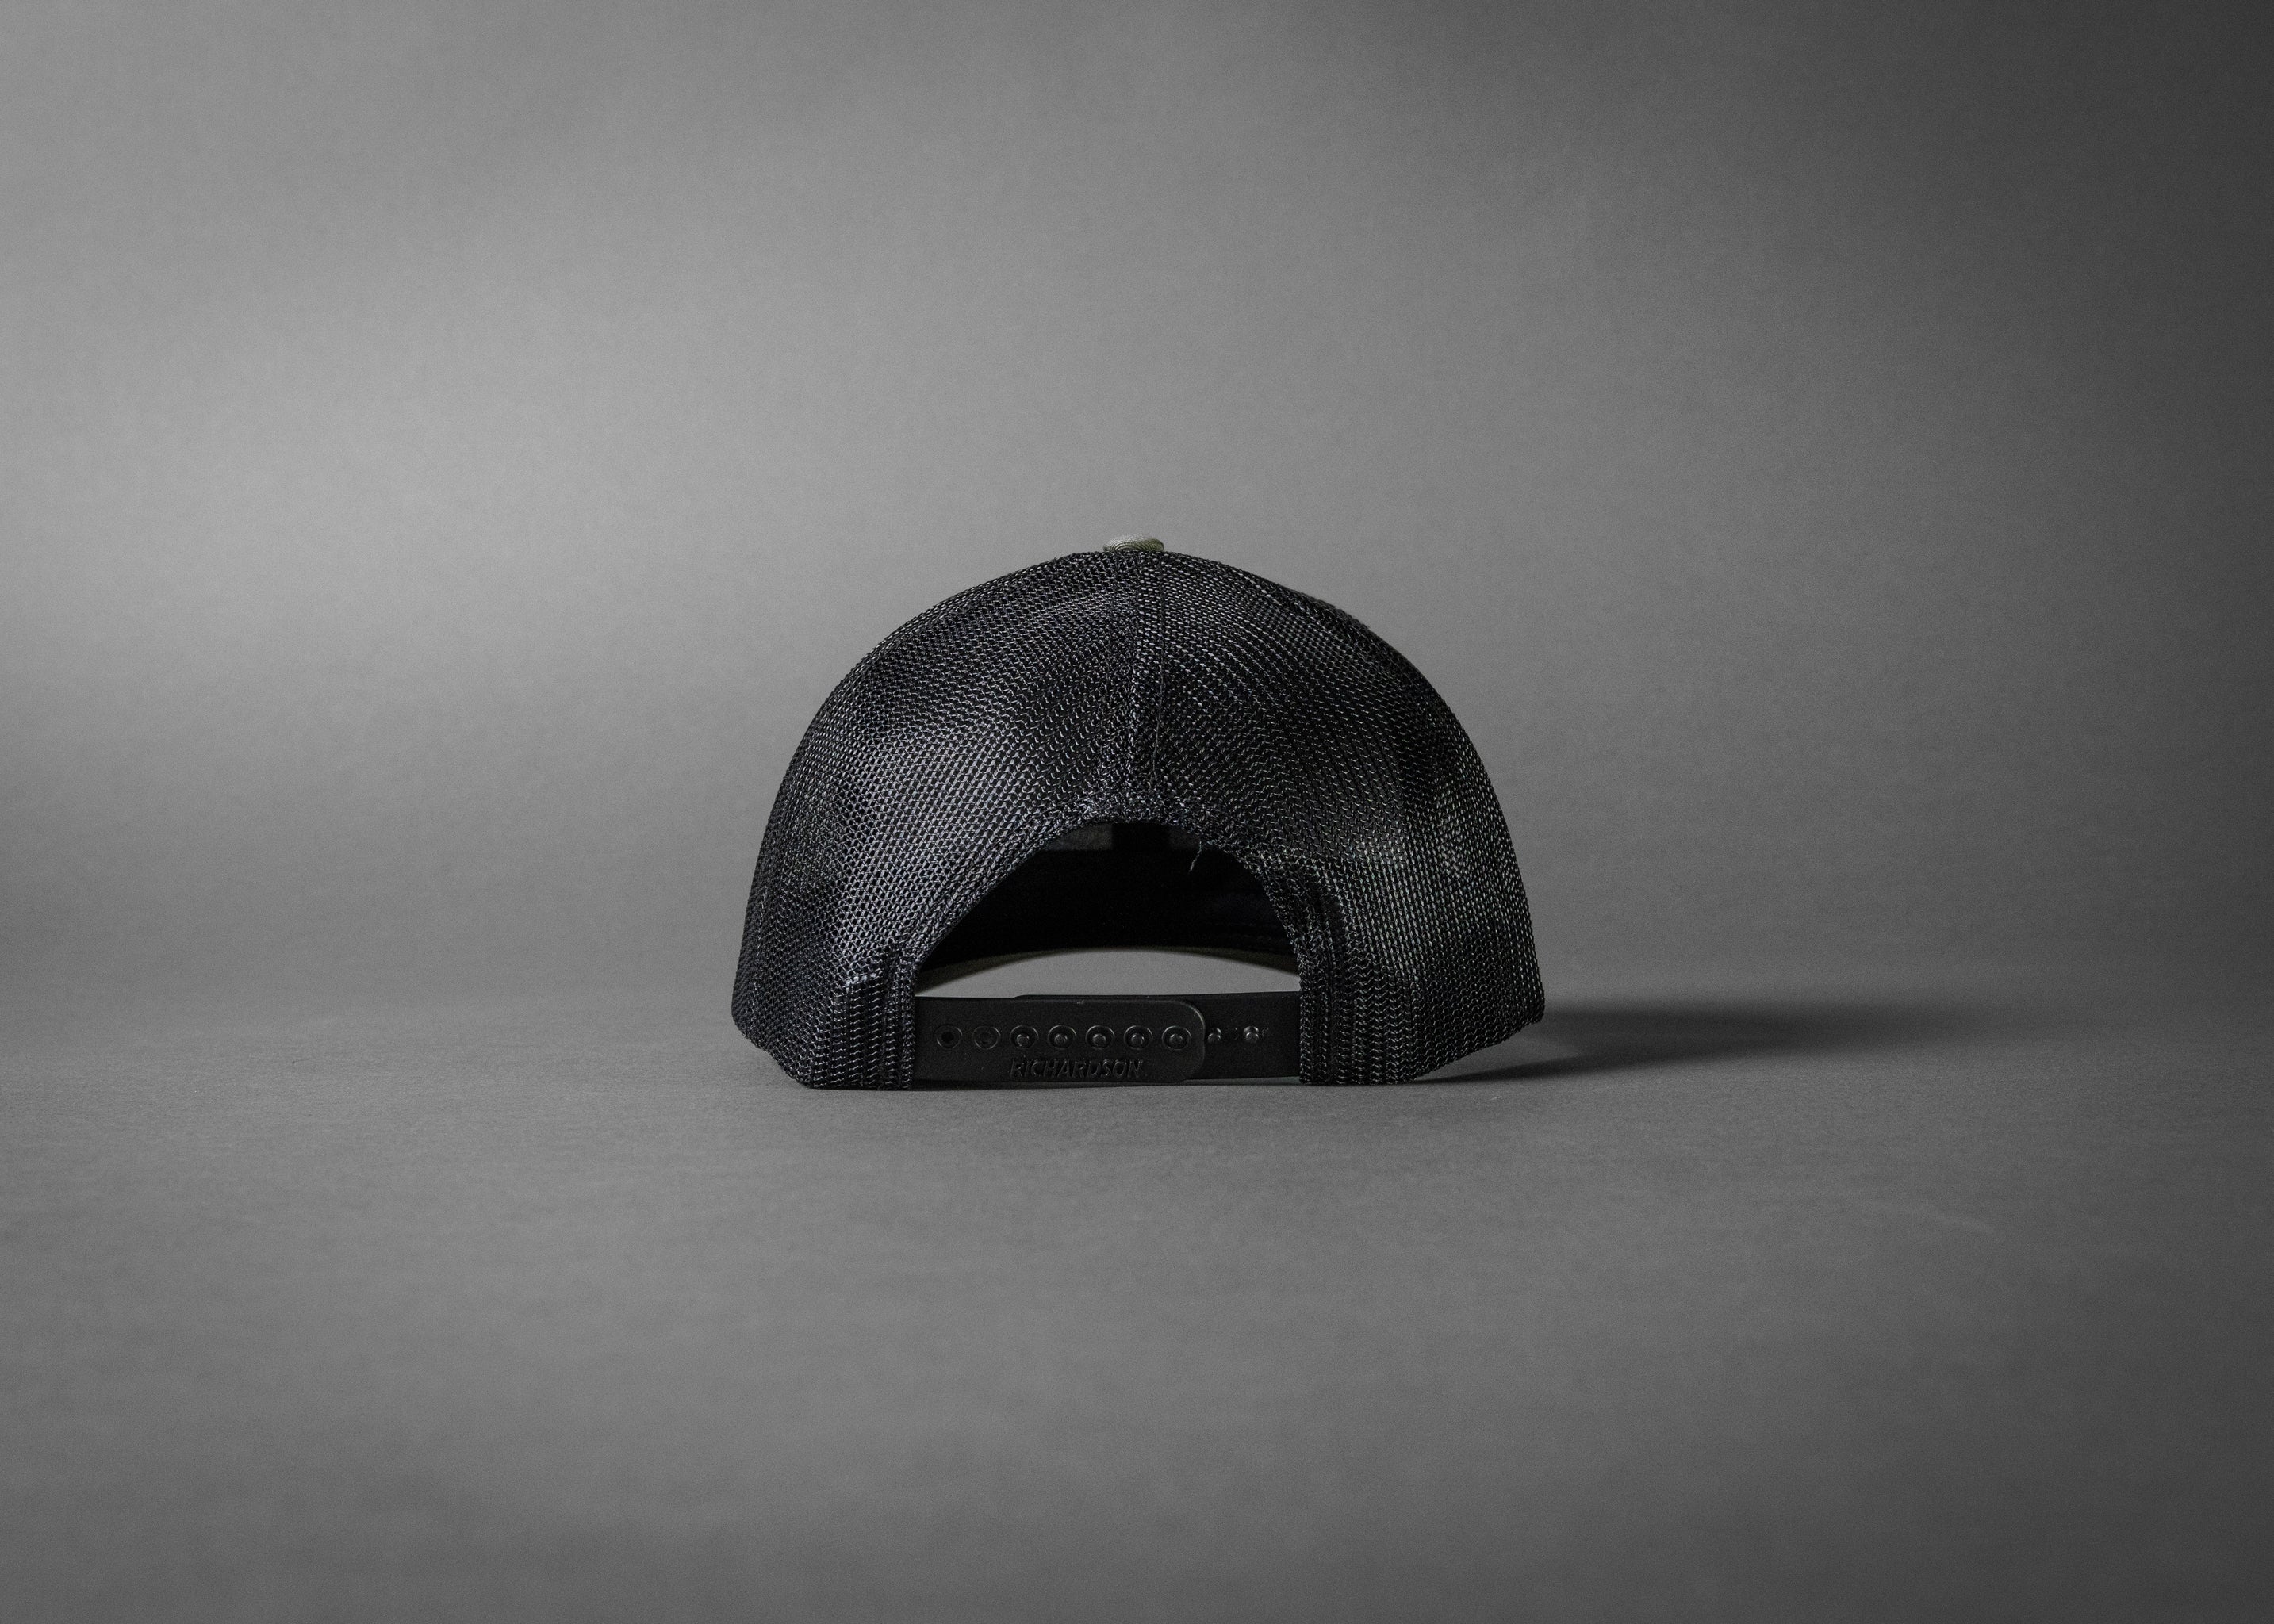 WIDOWMAKER (Loden Green/Black Premium Trucker Hat)